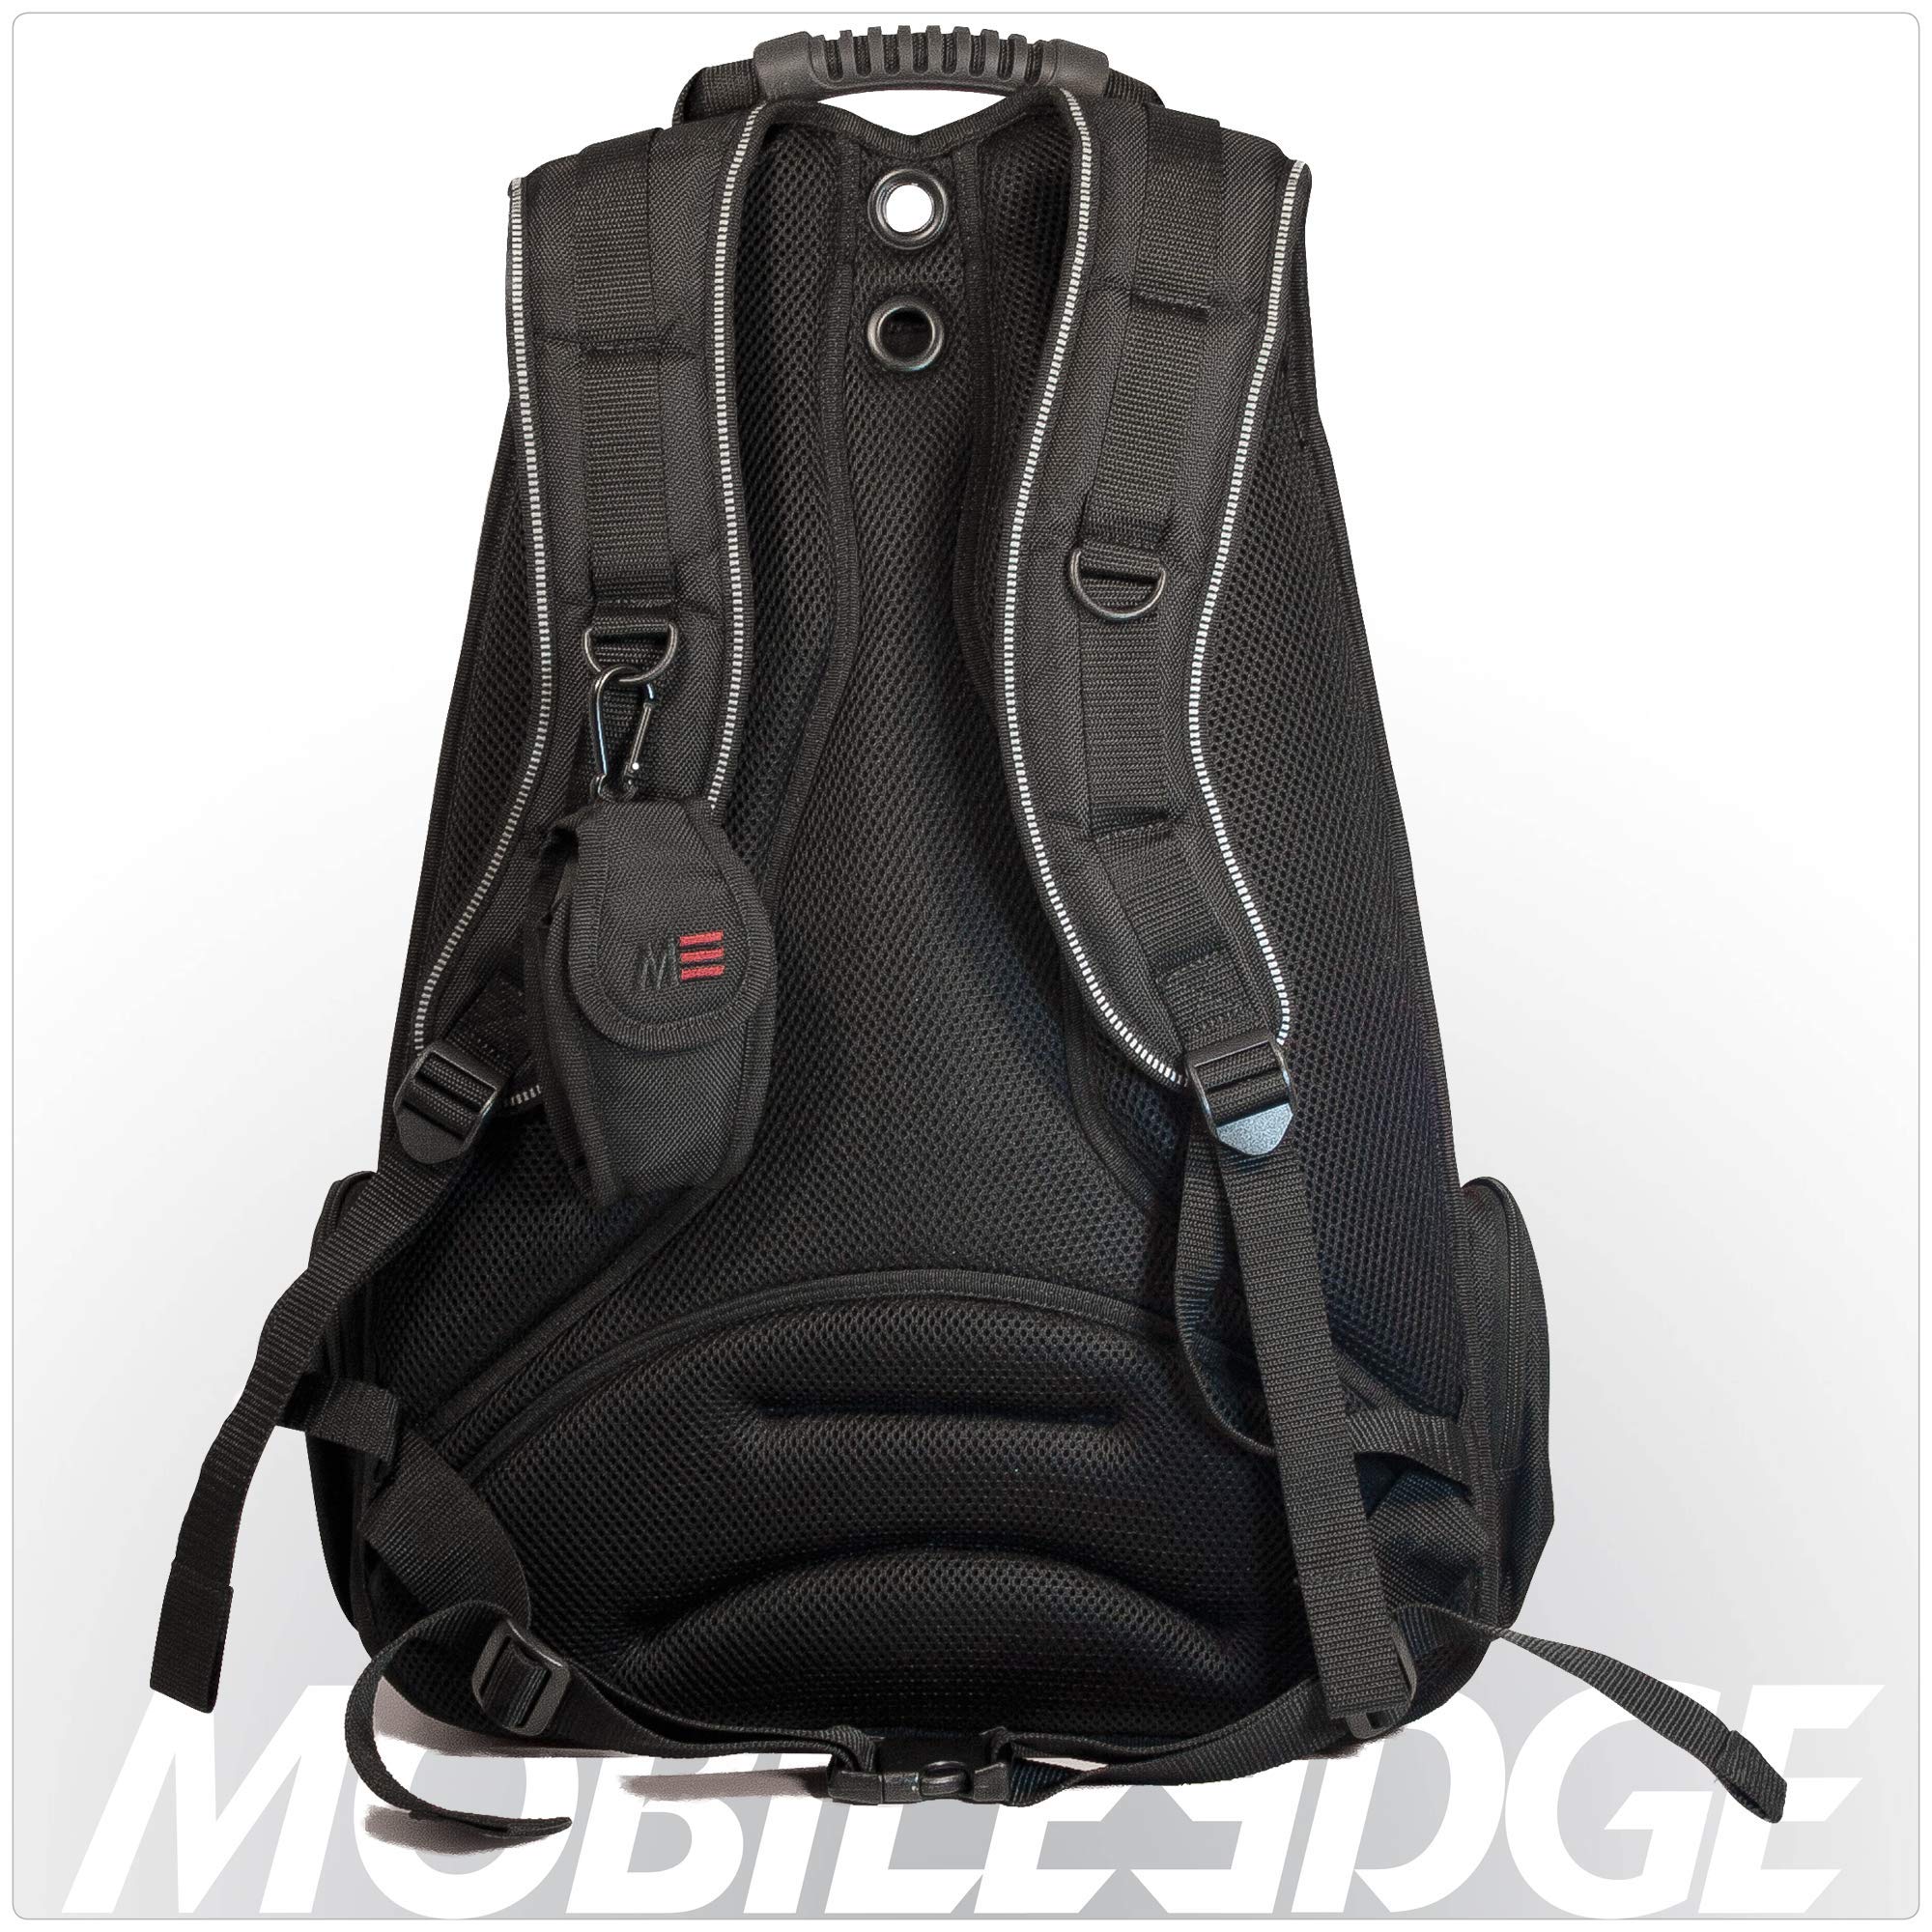 Mobile Edge - Premium 17.3" Laptop/Tablet Backpack - Black